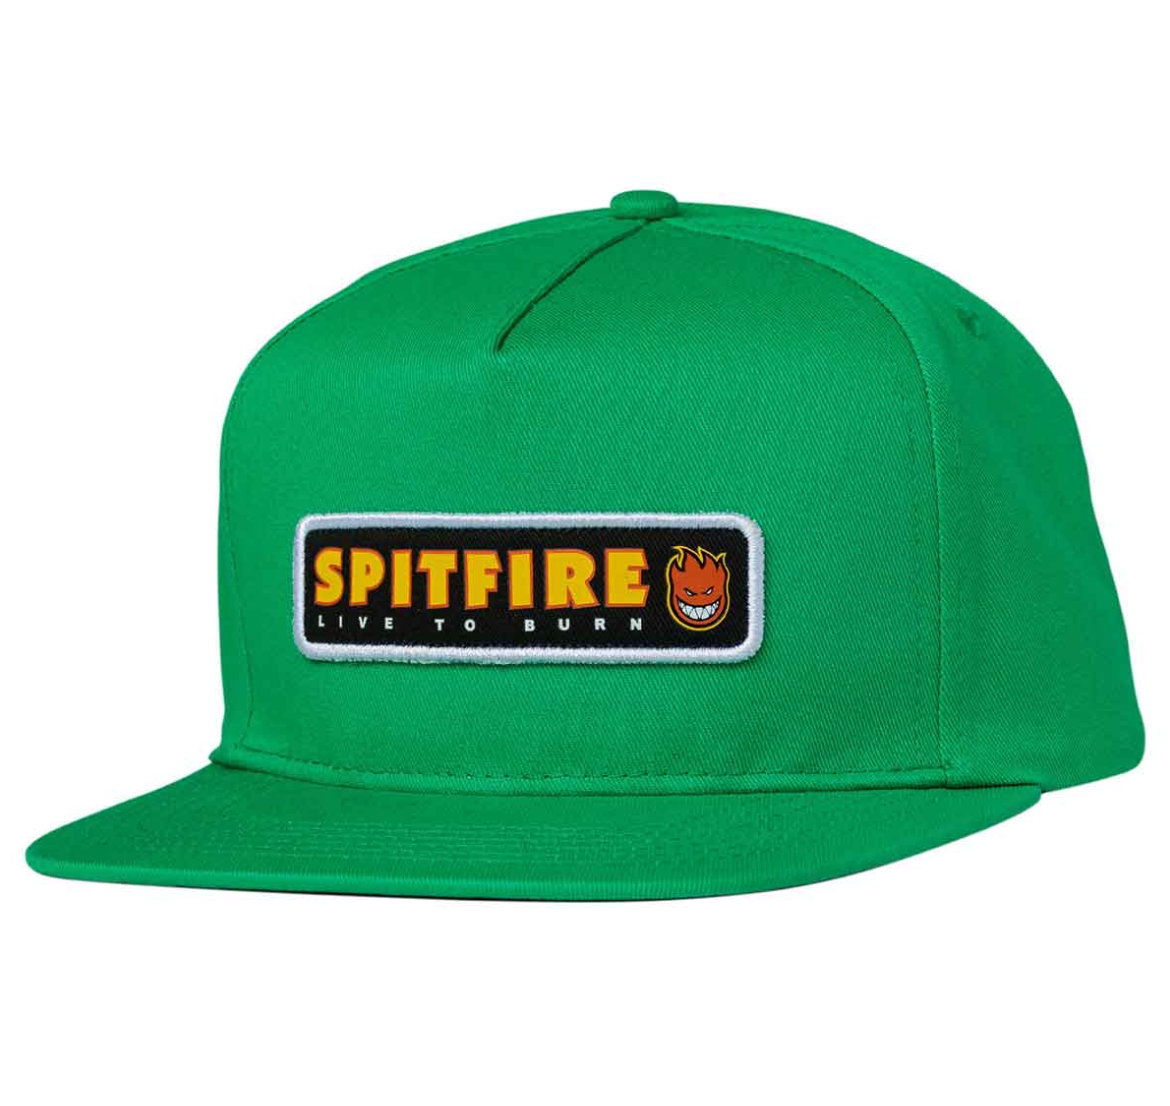 Spitfire Live To Burn Patch Adjustable Snapback Hat (Kelly Green)